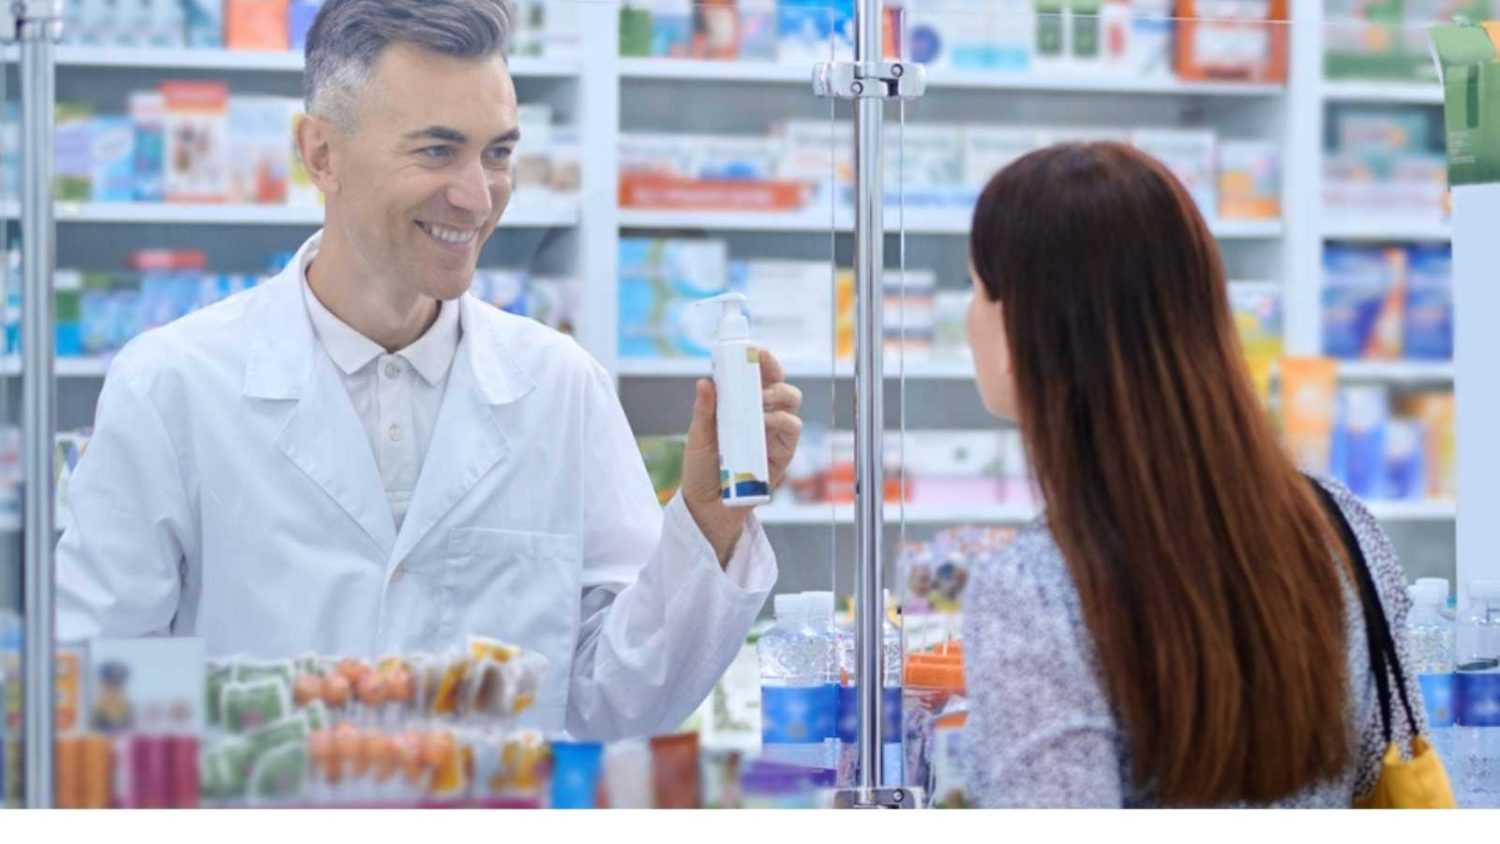 Woman buying medicine